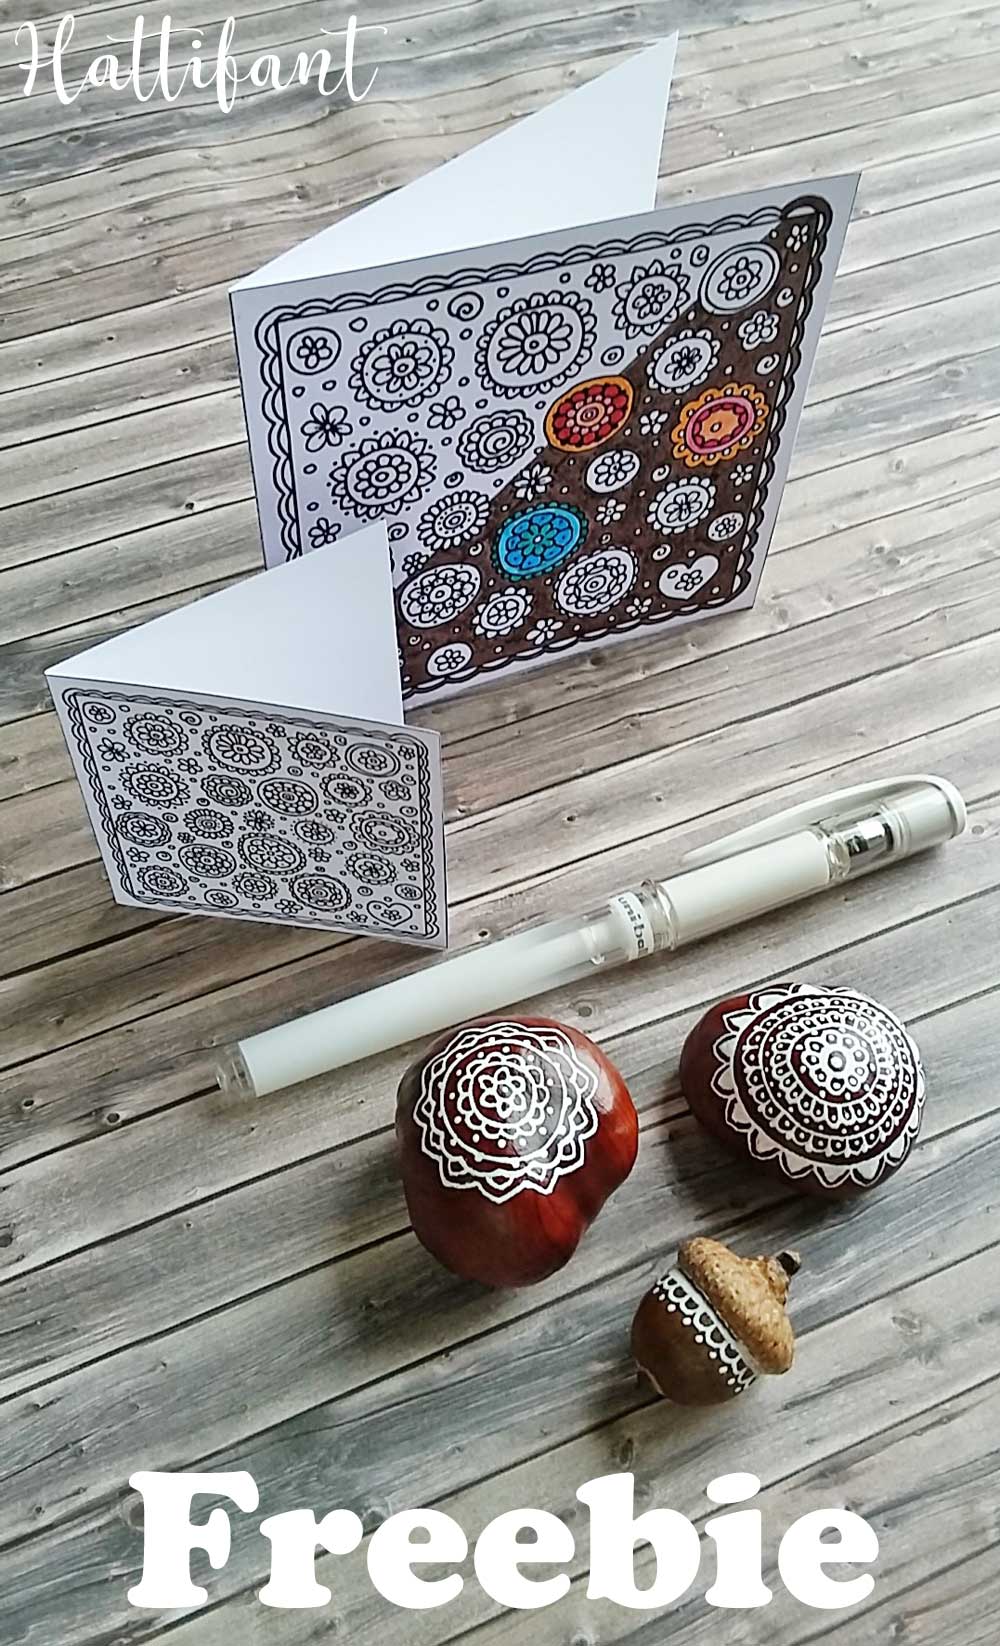 Hattifant's Autumn Crafts Mandala Chestnuts Doodling with Printable